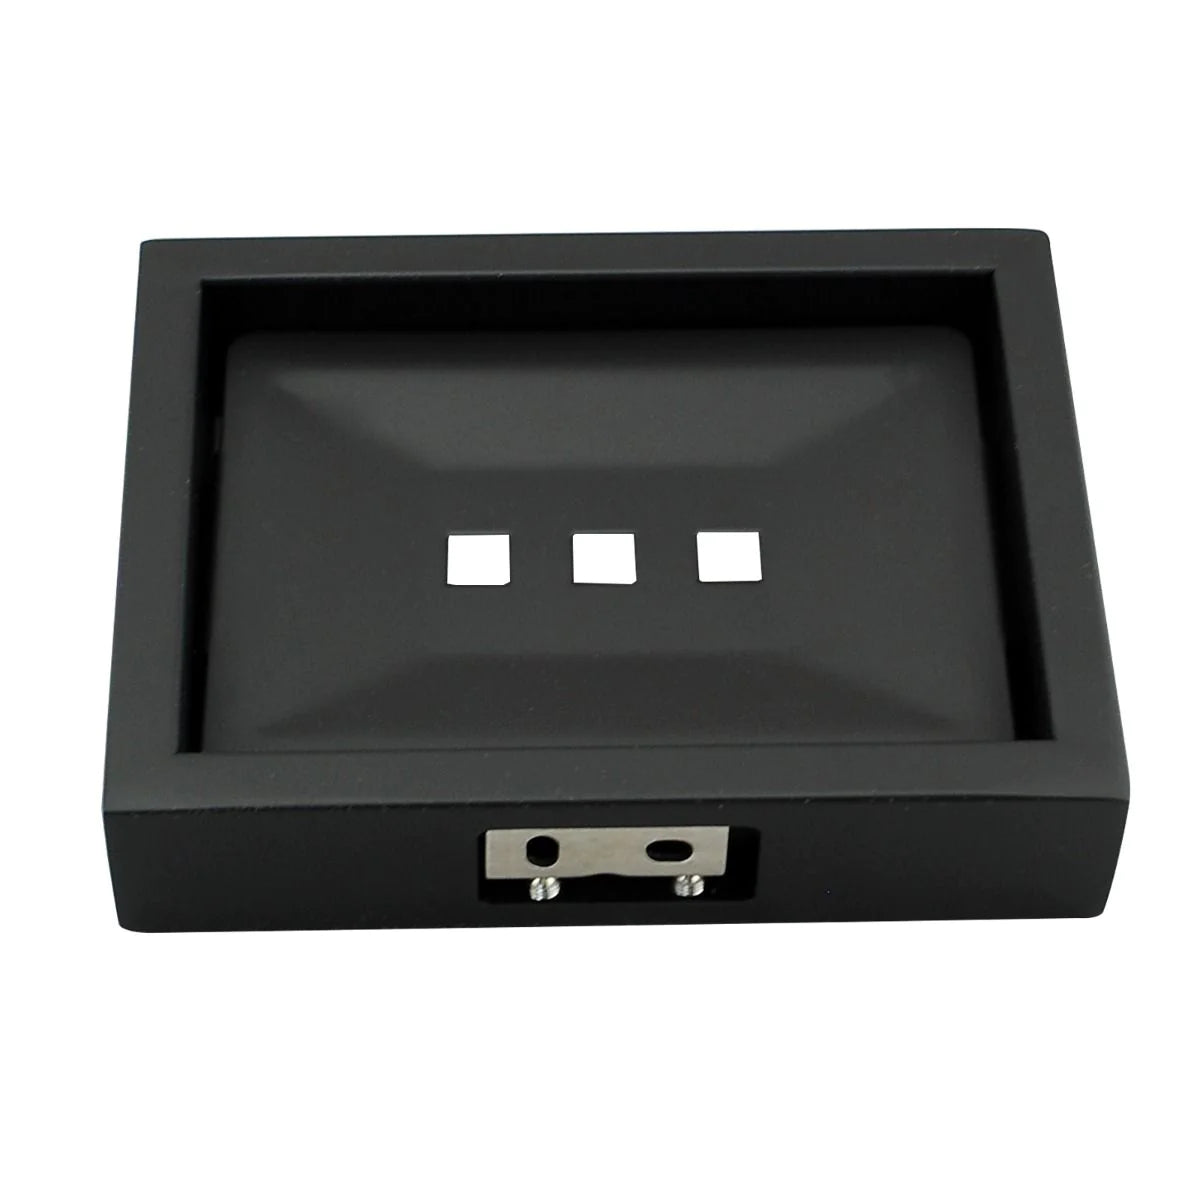 Ivano Soap Dish Holder: Elegant Accessory for Organized Bathroom Essentials-Black-OX6406-TR